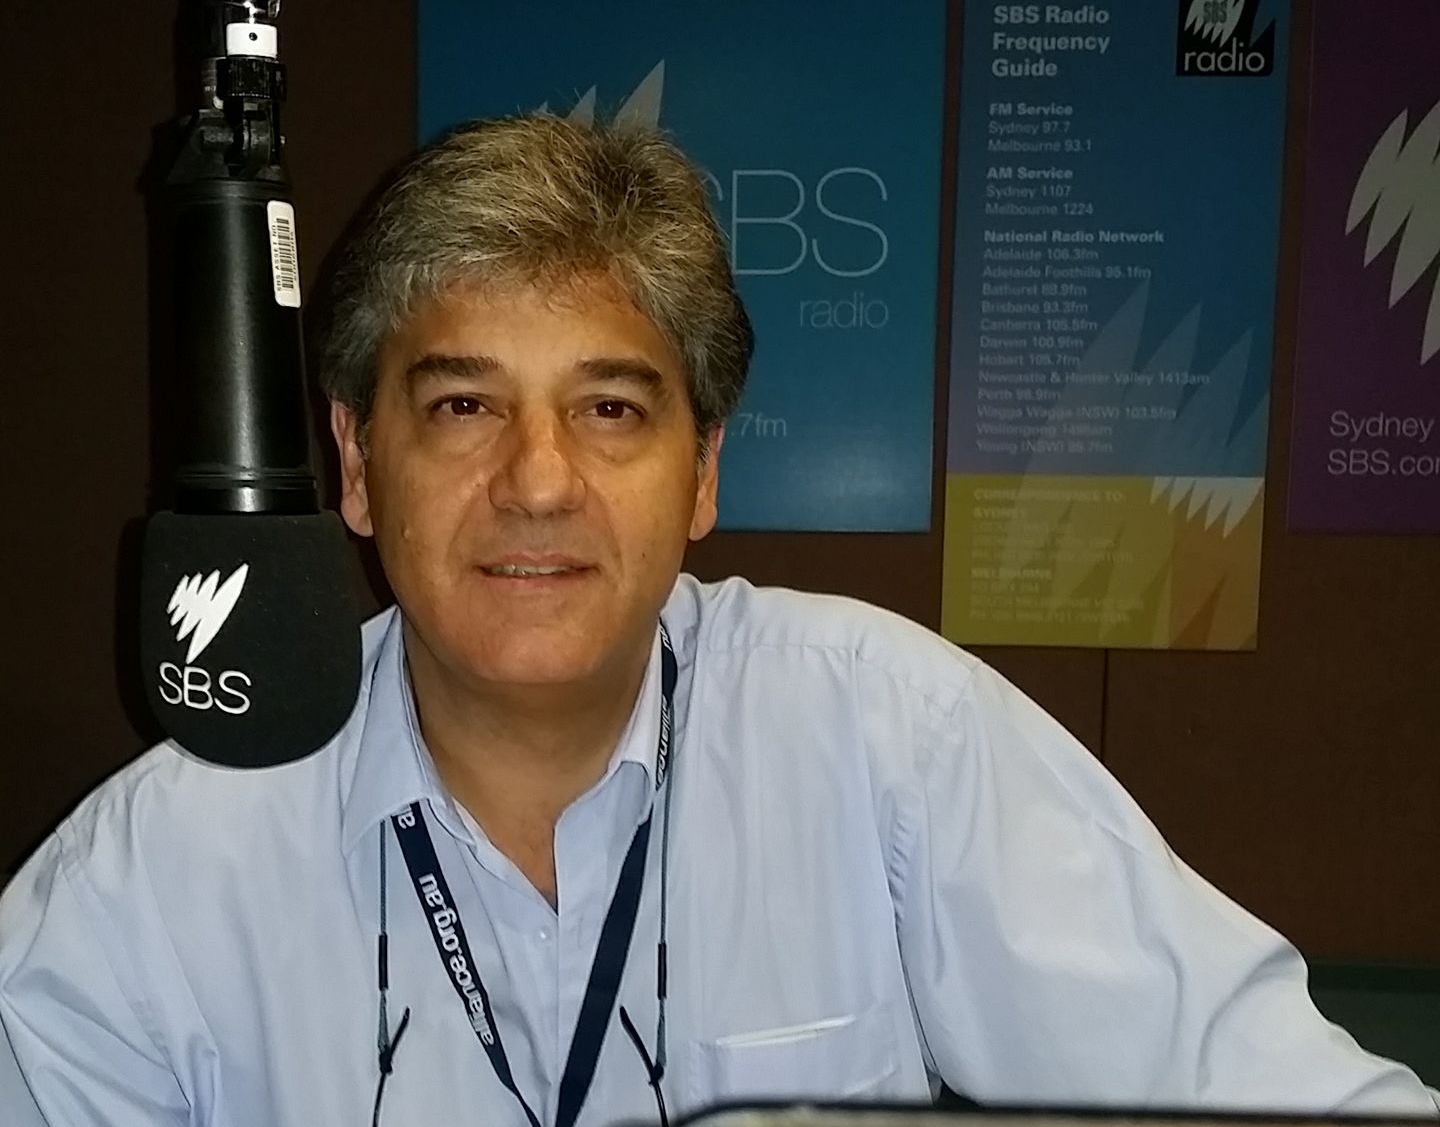 O δημοσιογράφος Θέμης Καλλός από το Σίδνεϋ τιμήθηκε από το Ίδρυμα Μπότση